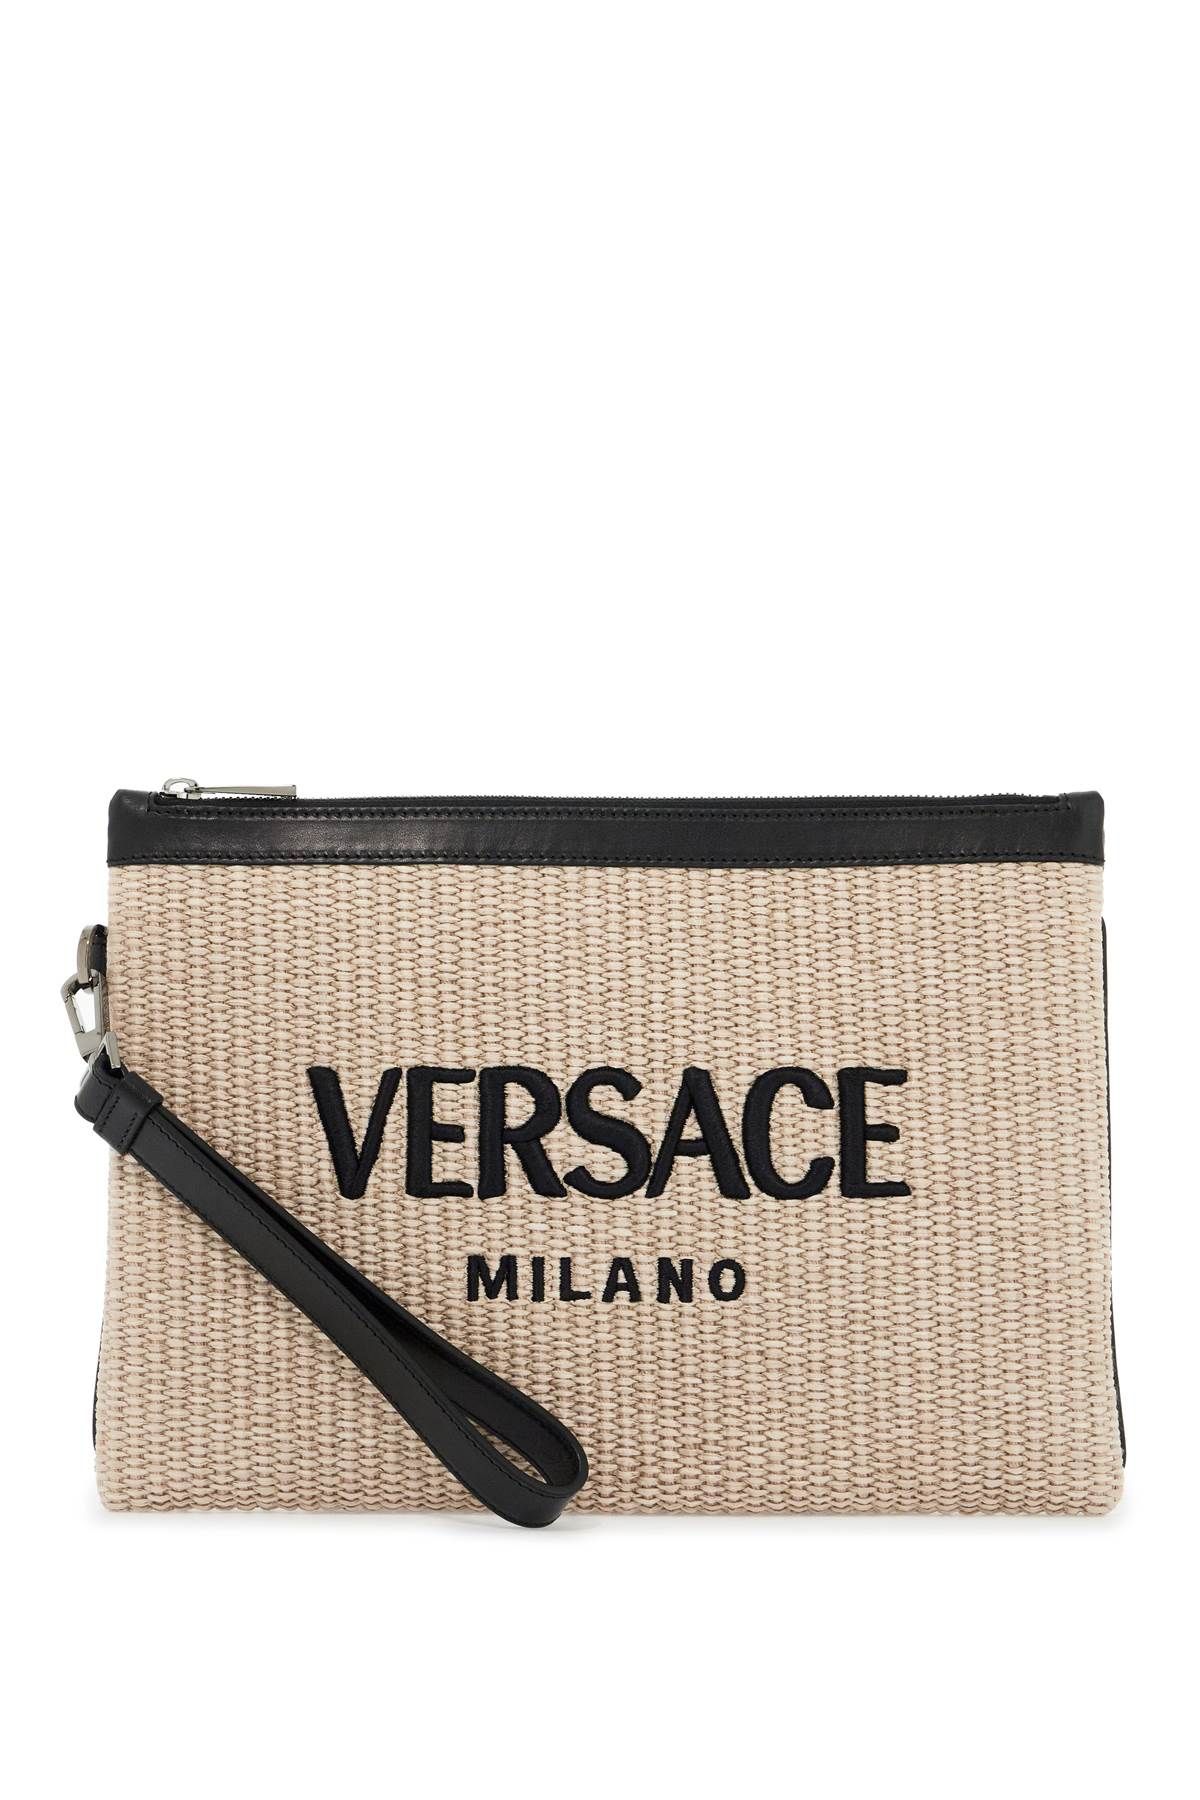 Versace VERSACE raffia pouch for